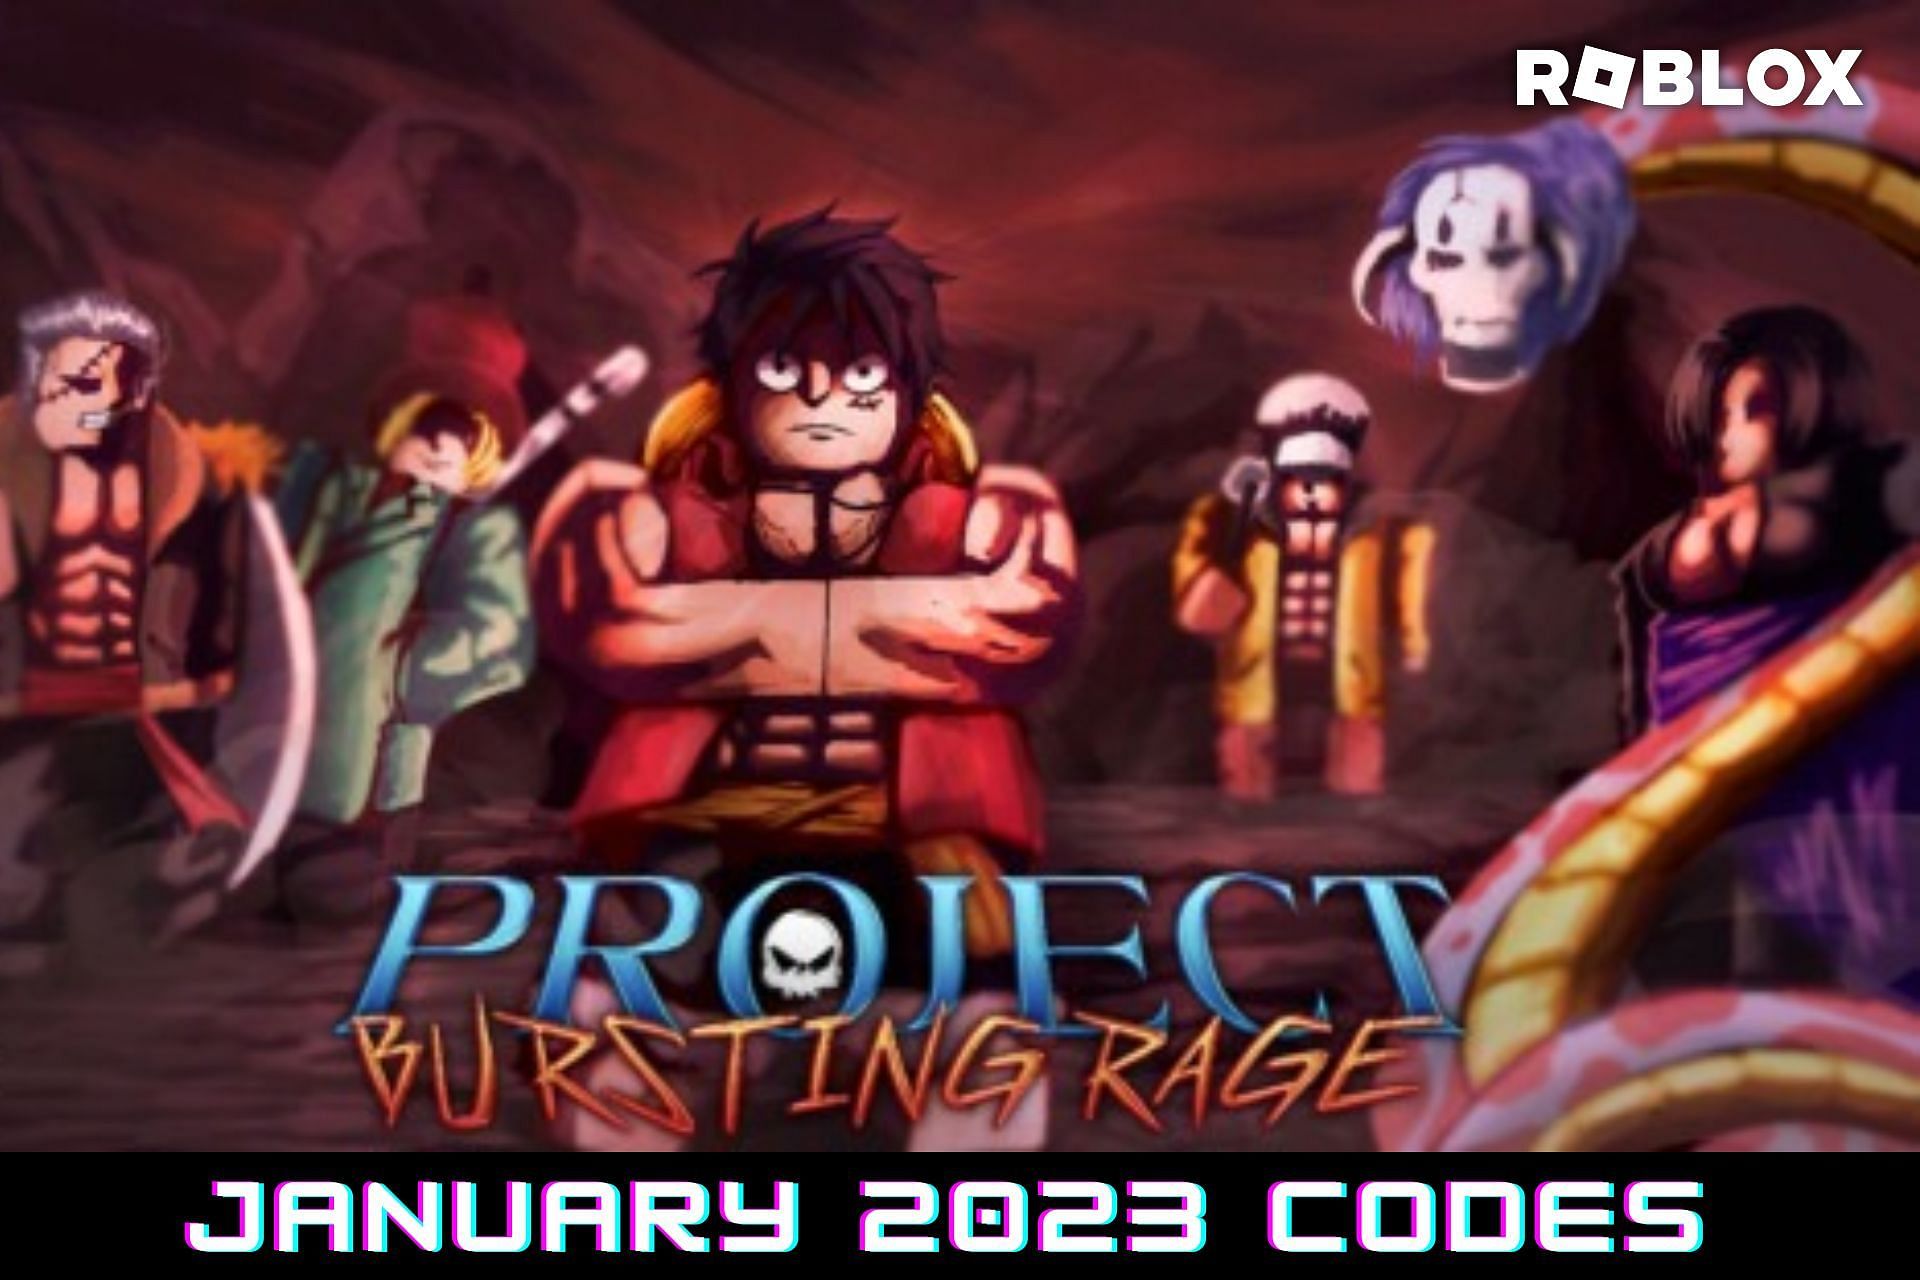 Roblox Project Bursting Rage Gameplay